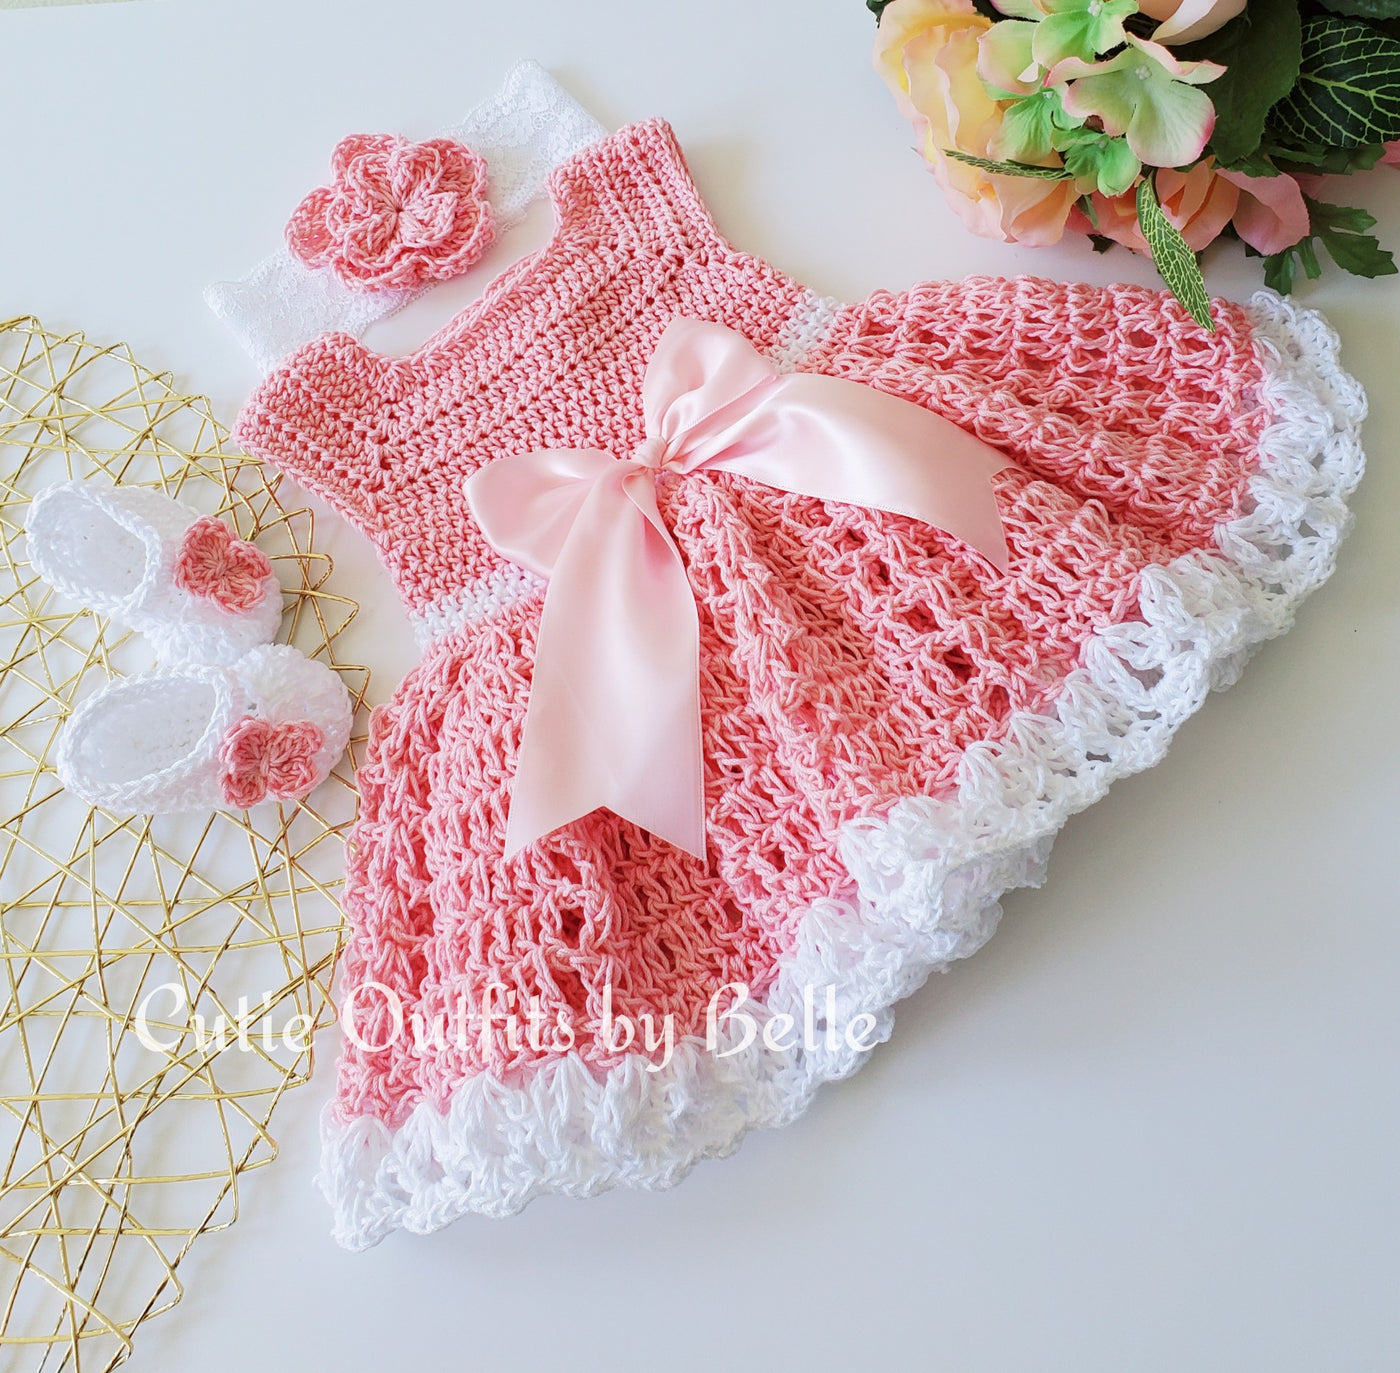 Pink Crochet Baby Dress, Cotton Crochet Baby Outfit, Baby Shower Gift, Vestido Bebe